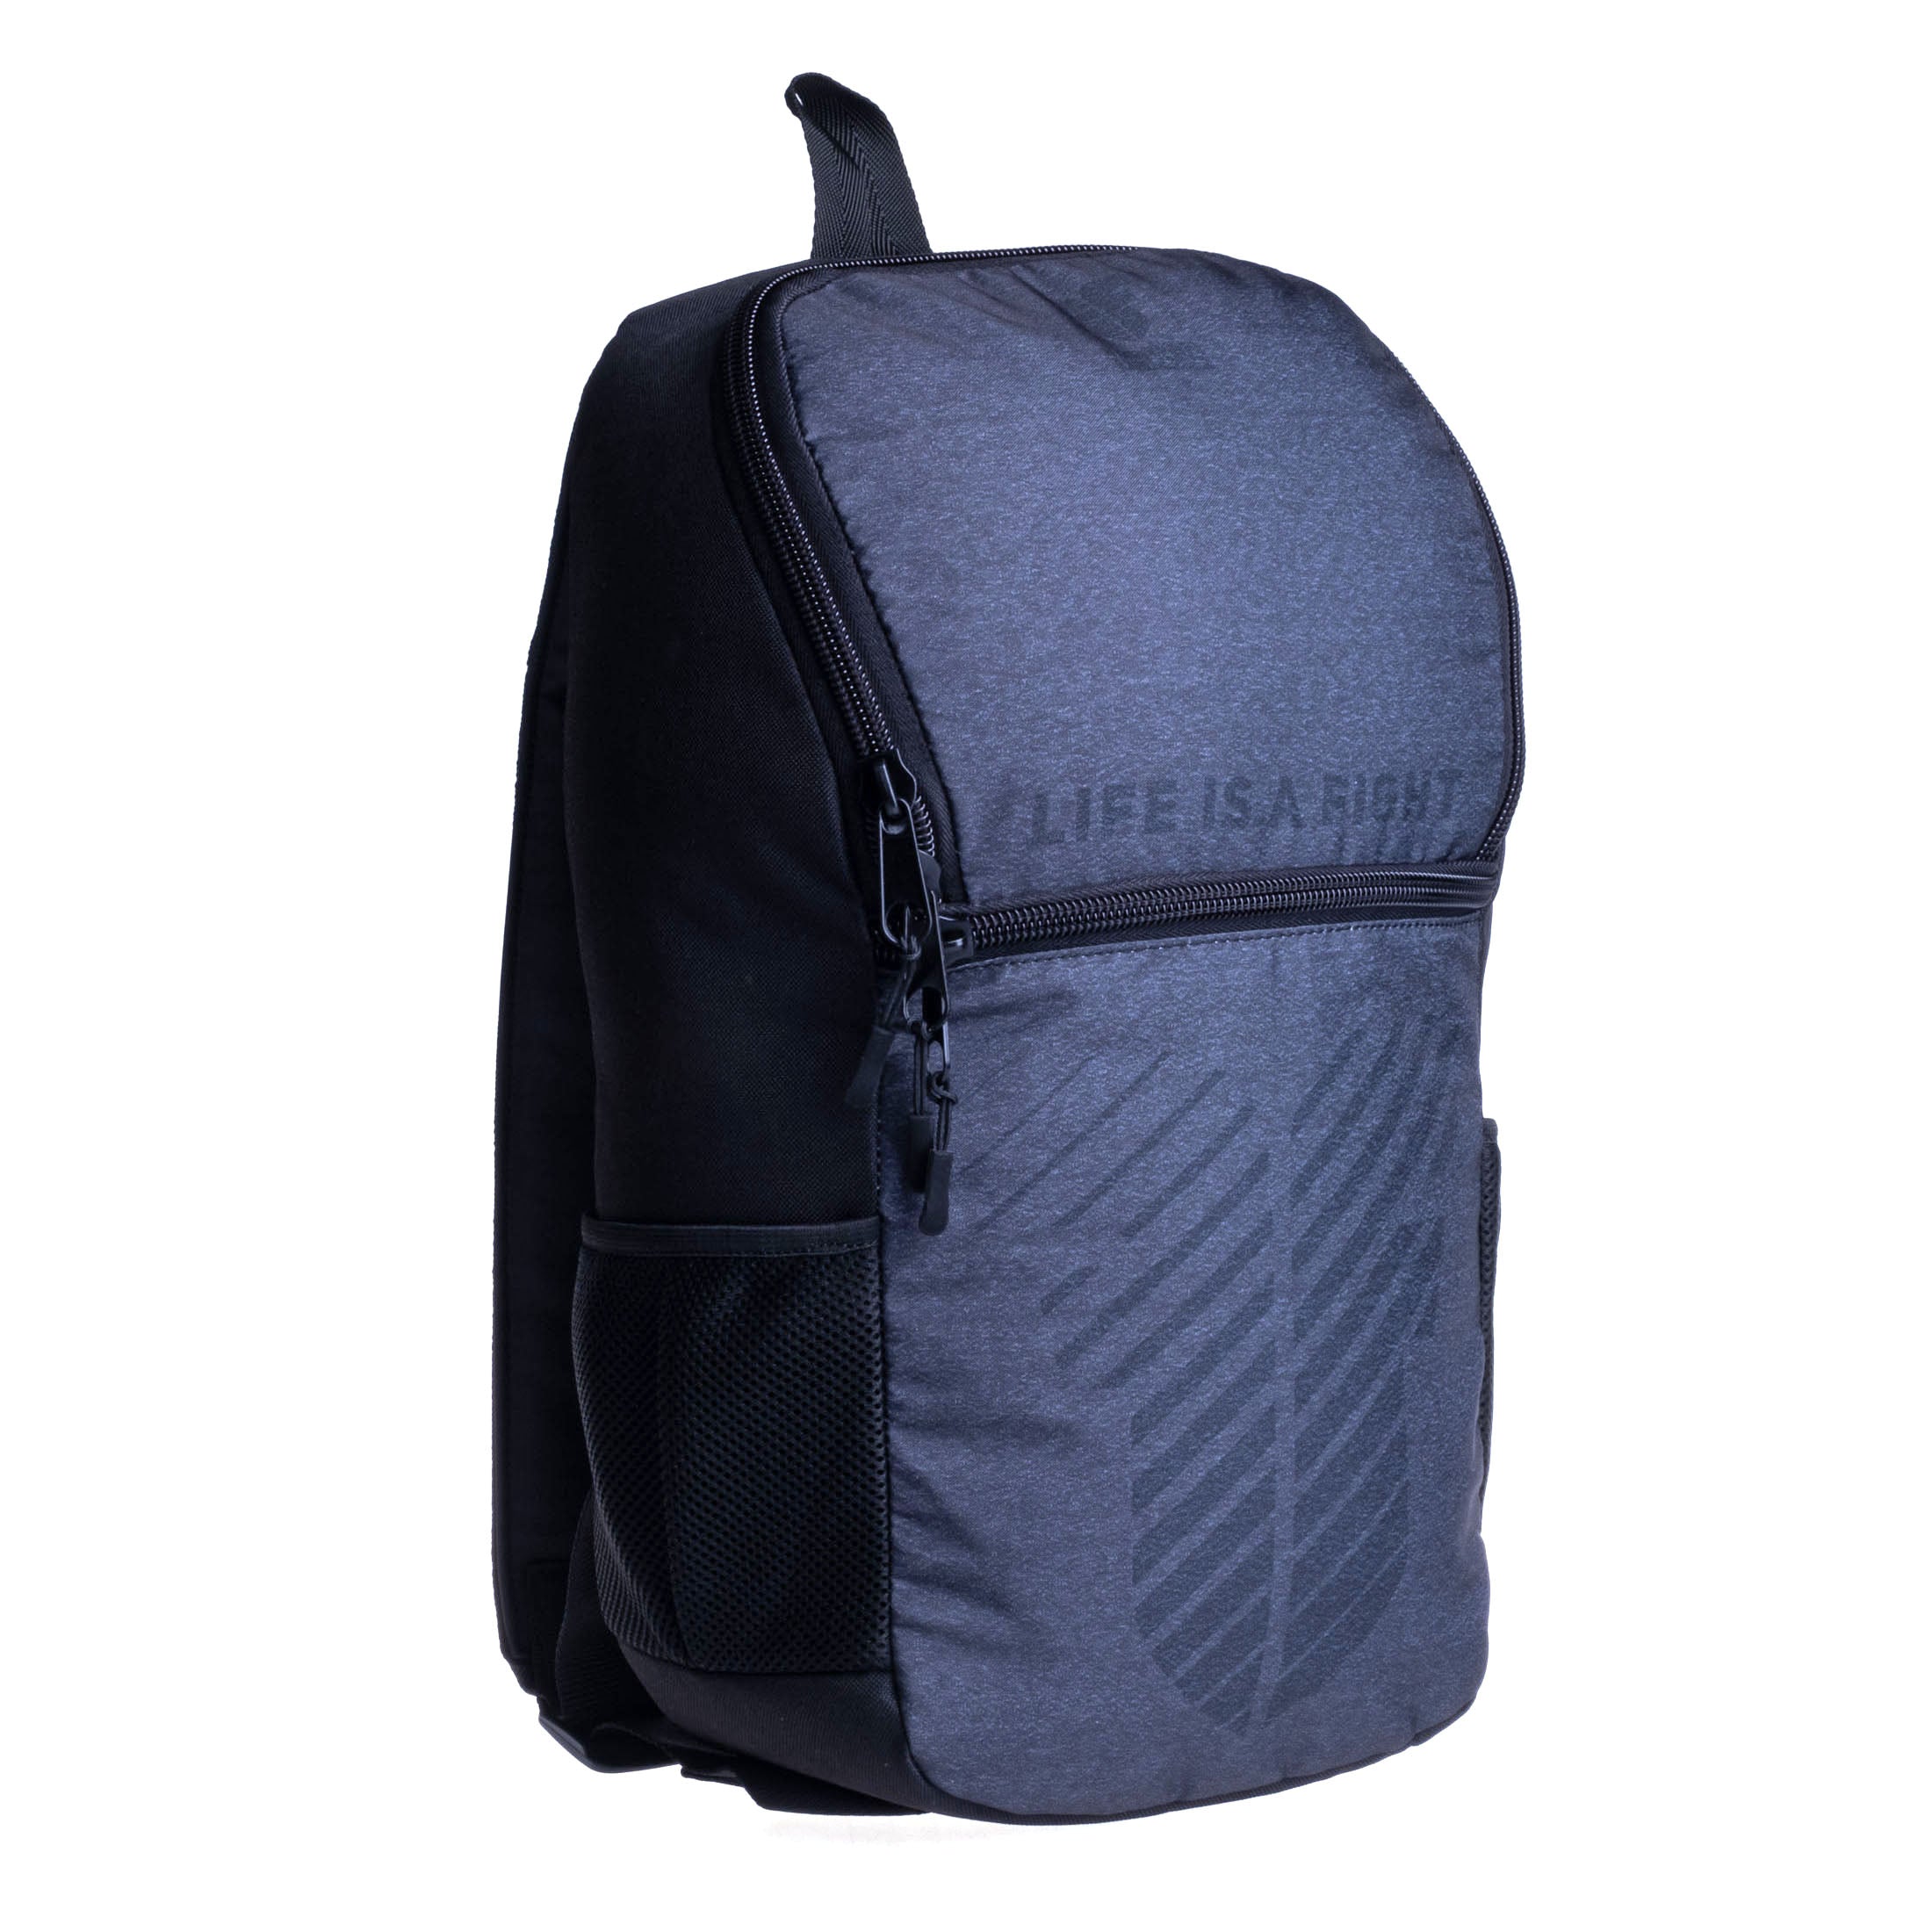 Reebok Unisex's Backpack, Black, One Size